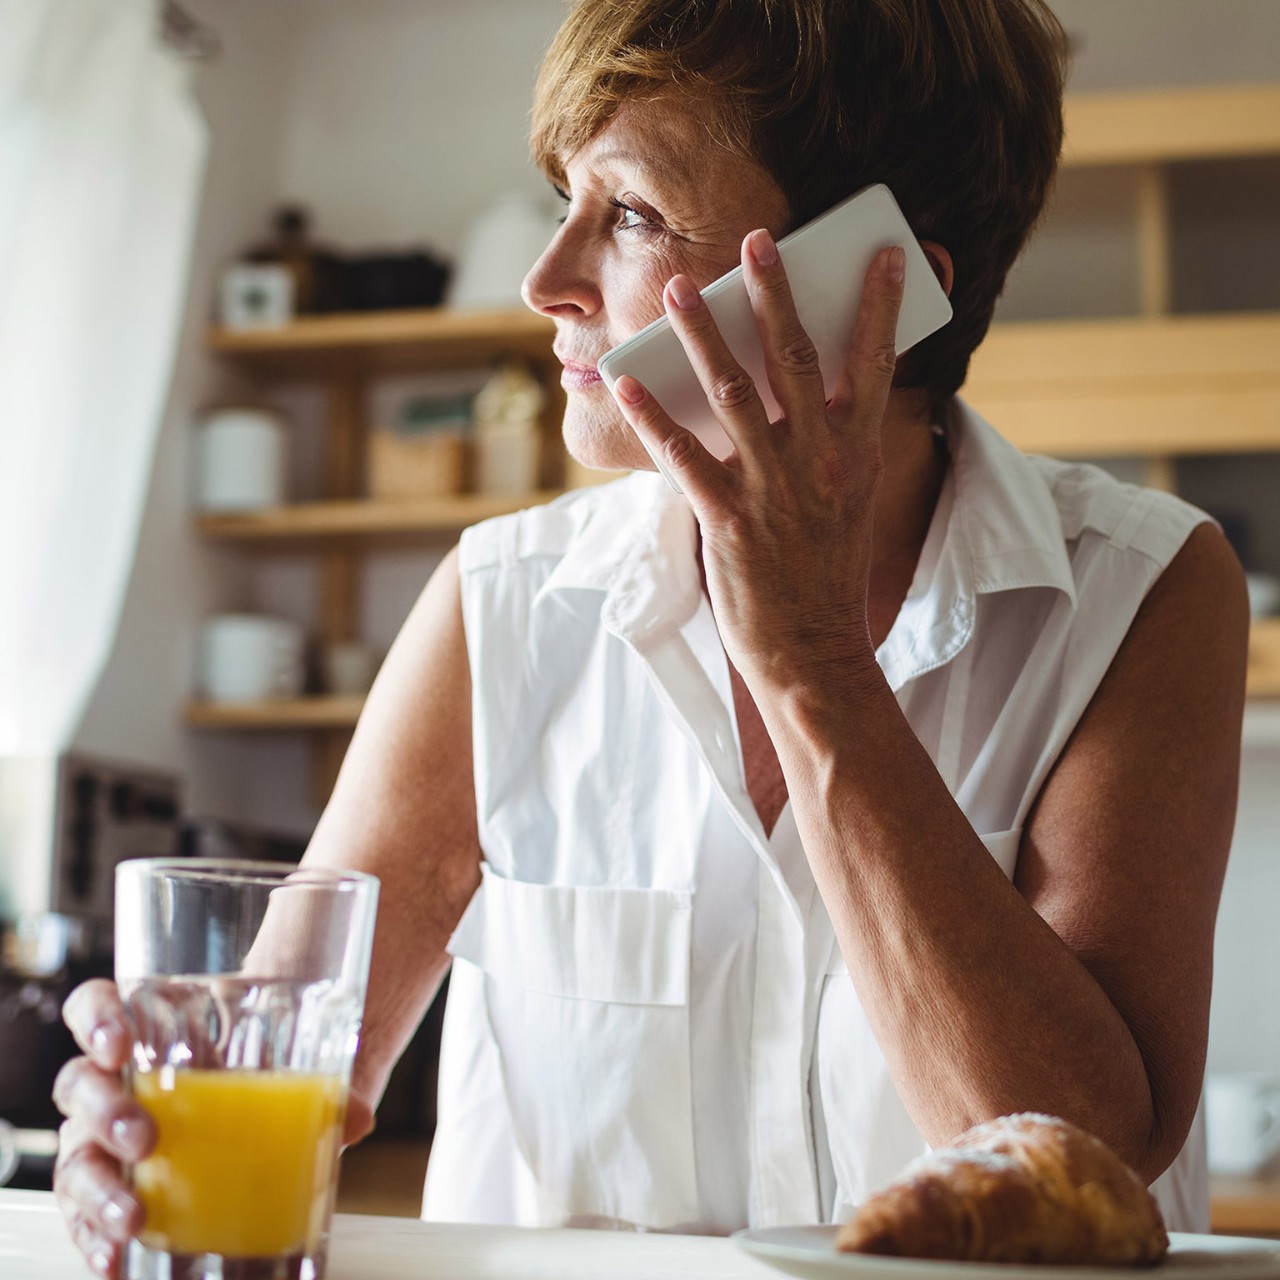 Senior woman talking on phone while having breakfast